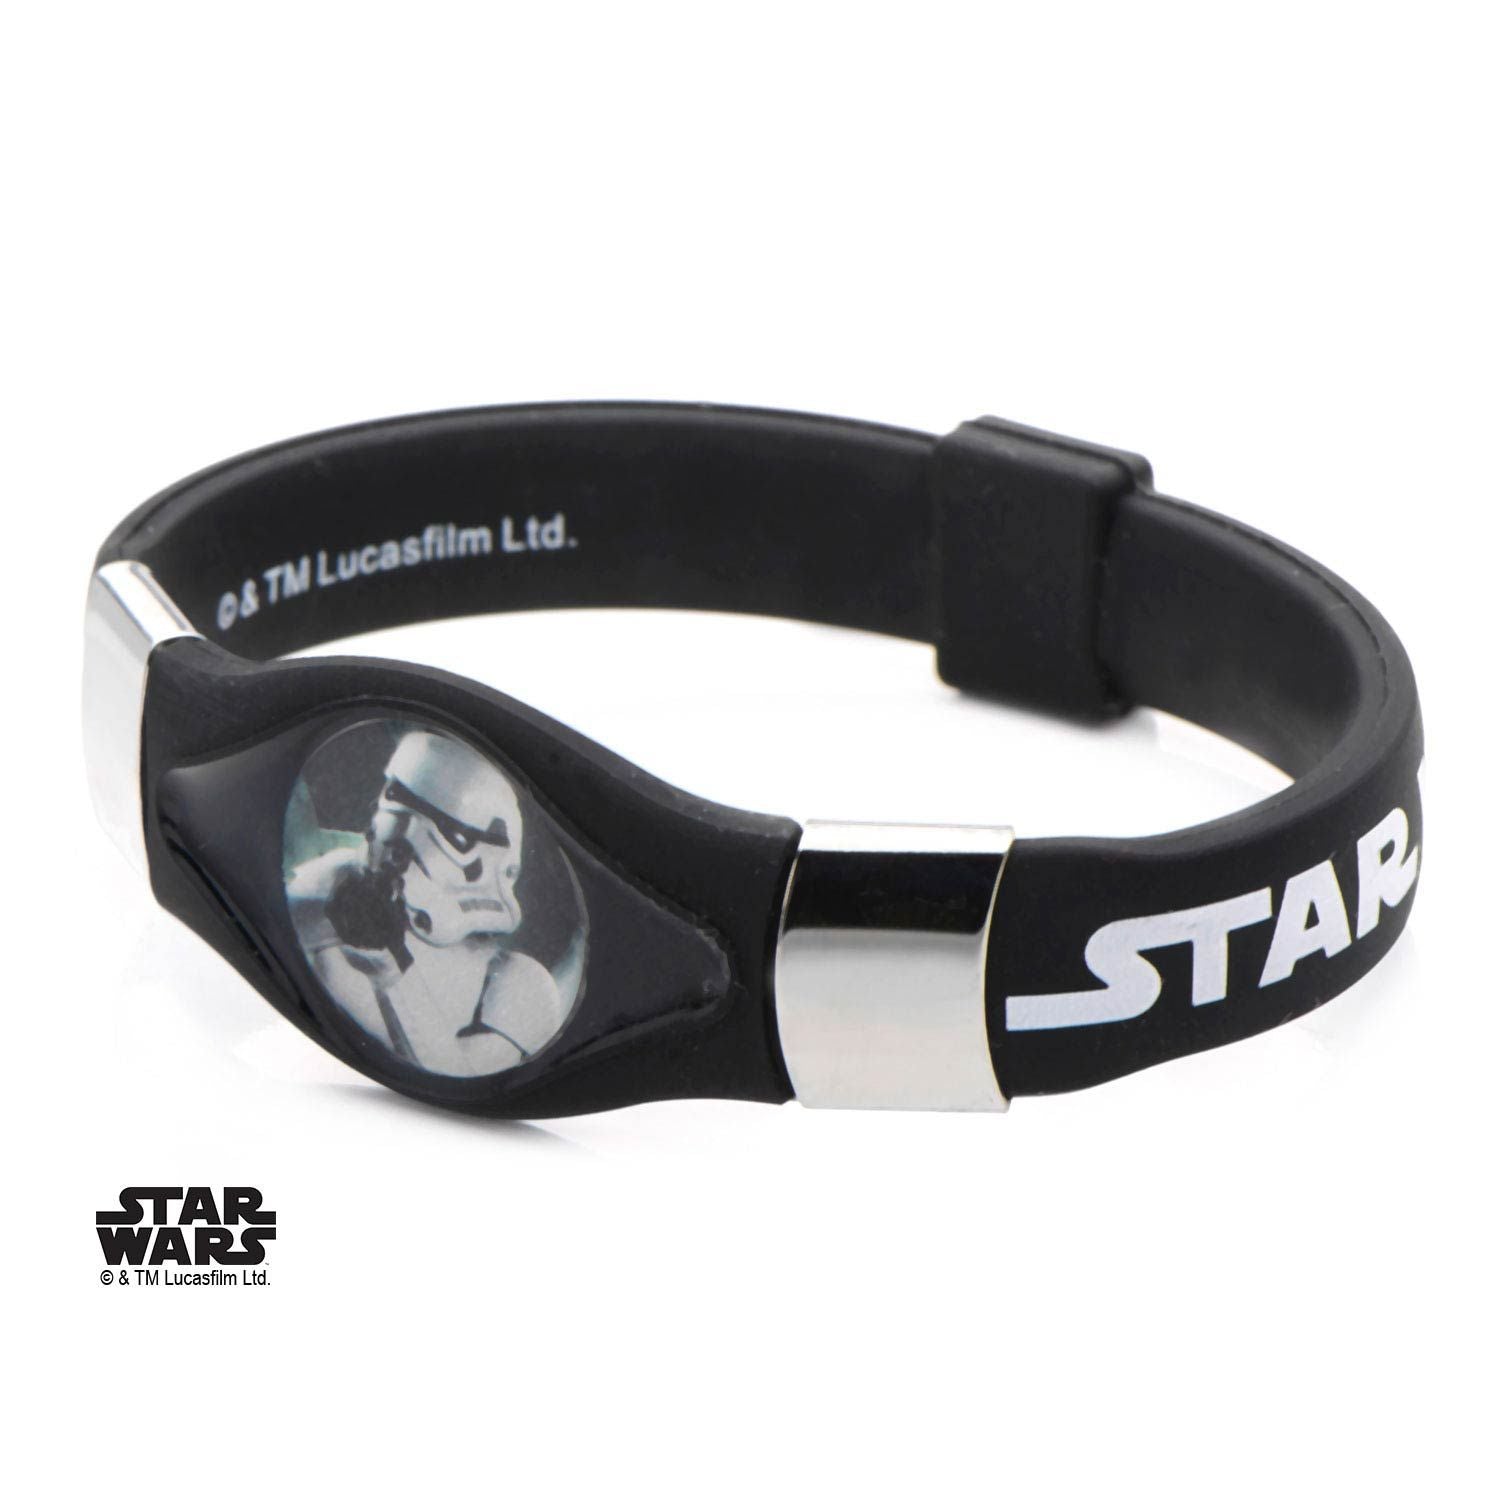 STAR WARS Star Wars Stormtrooper Silicone Bracelet -Rebel Bod-RebelBod